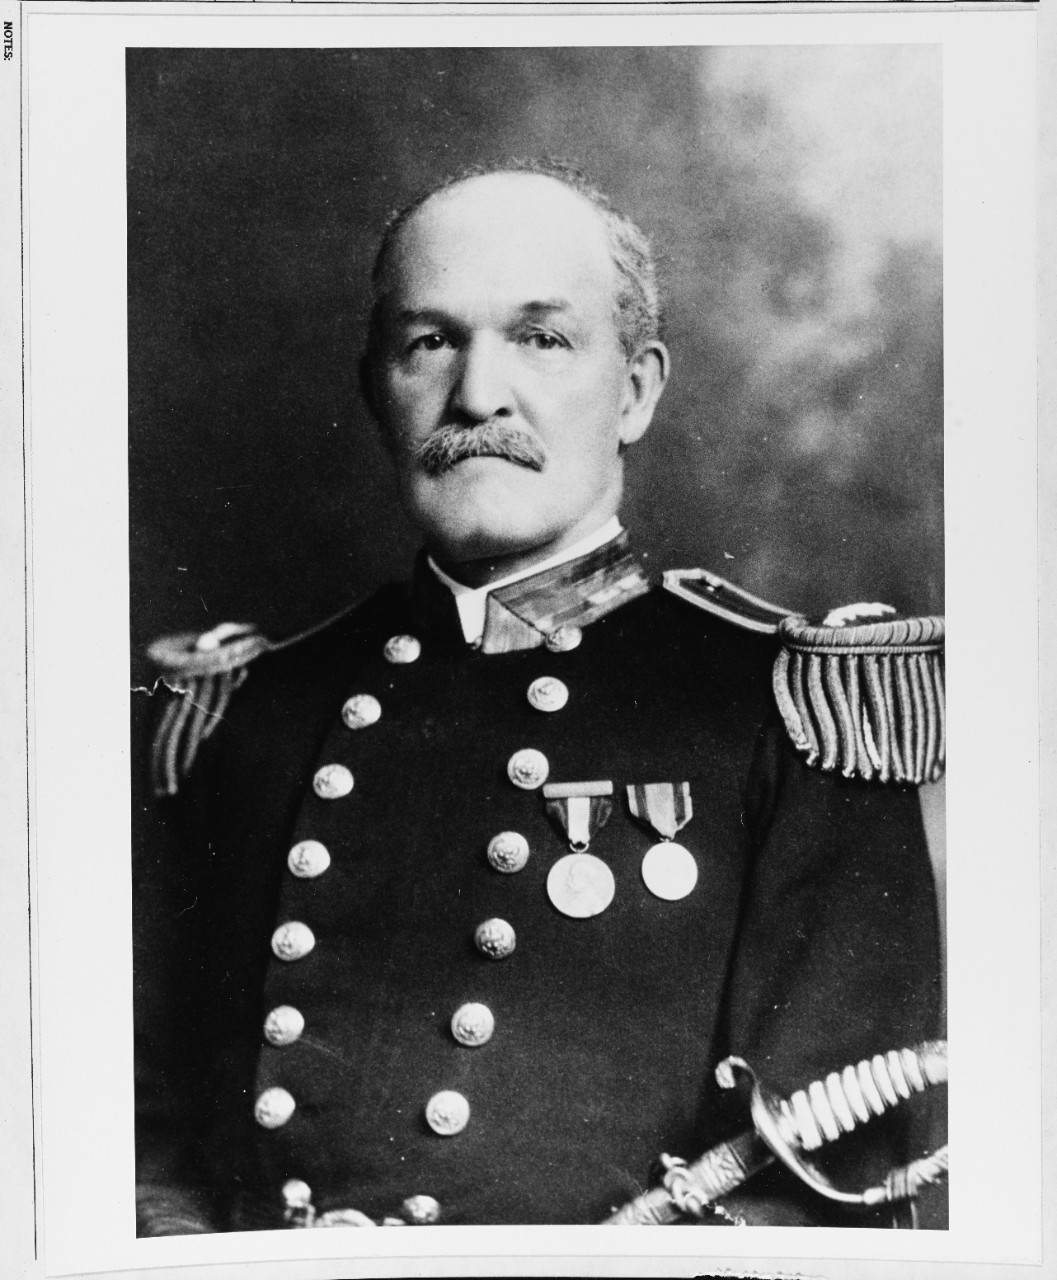 Rear Admiral Joseph B. Murdock, U.S. Naval Academy class of 1871.